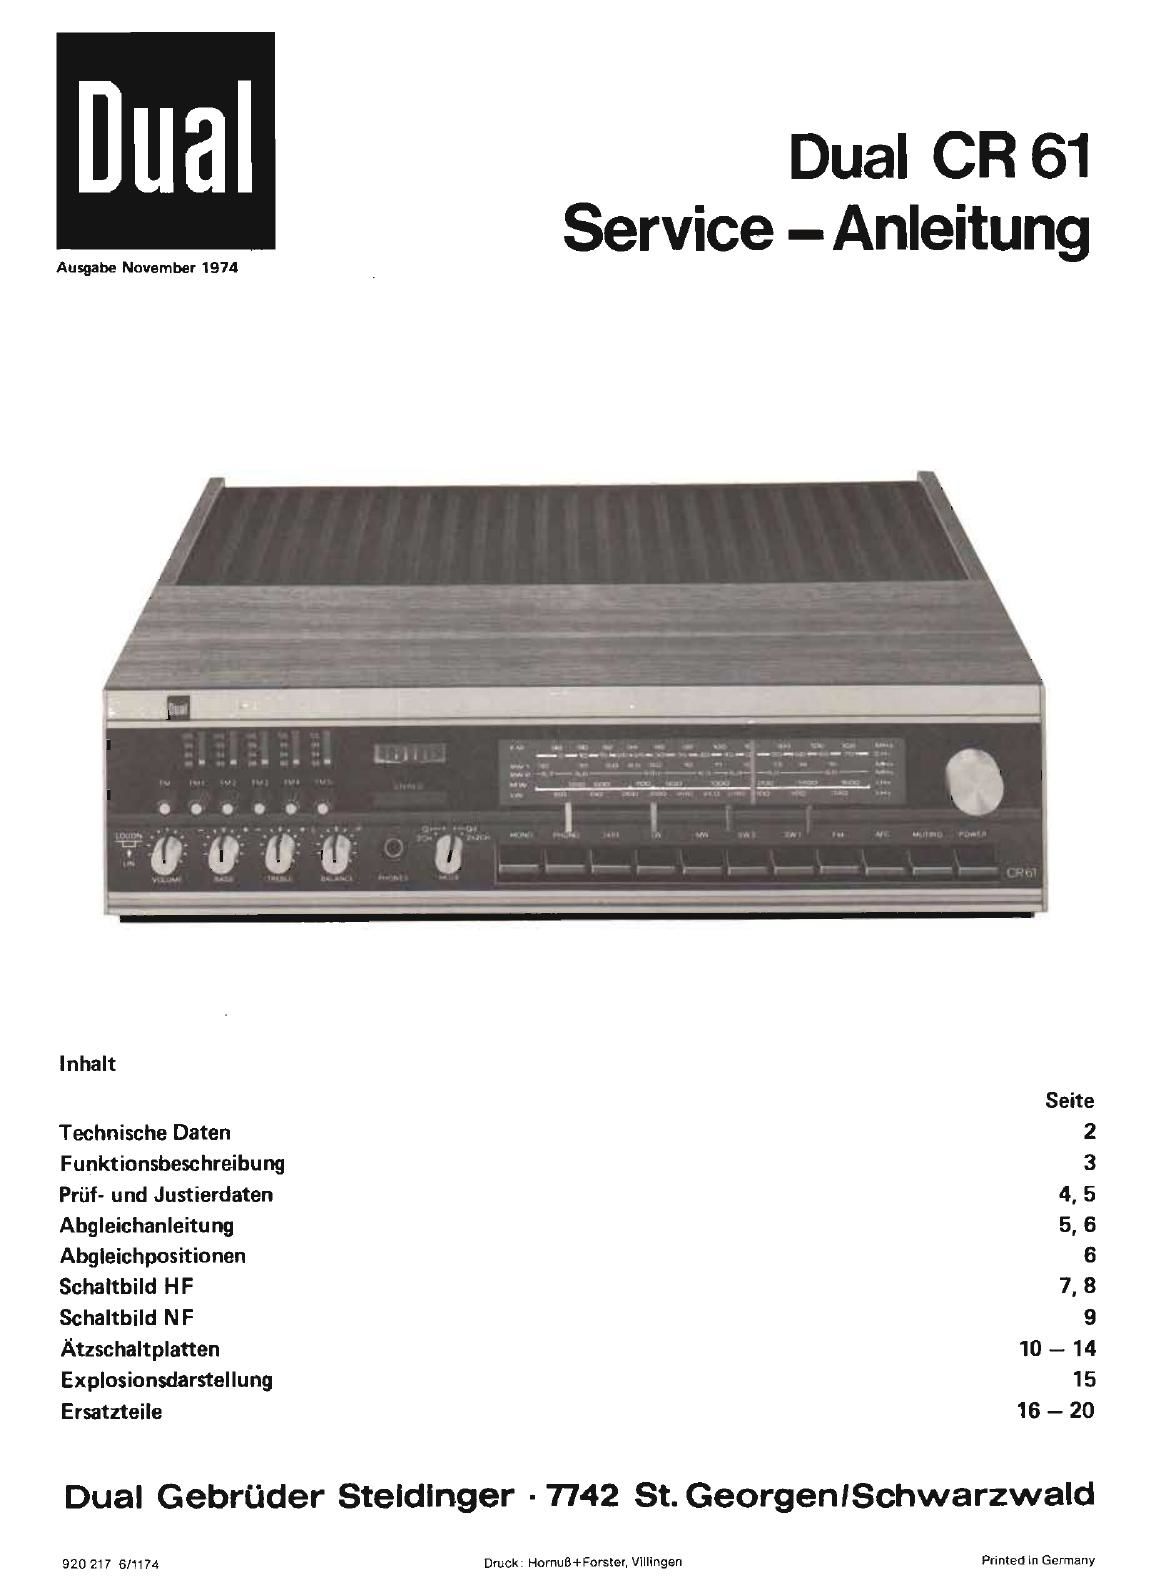 Dual CR 61 Service Manual